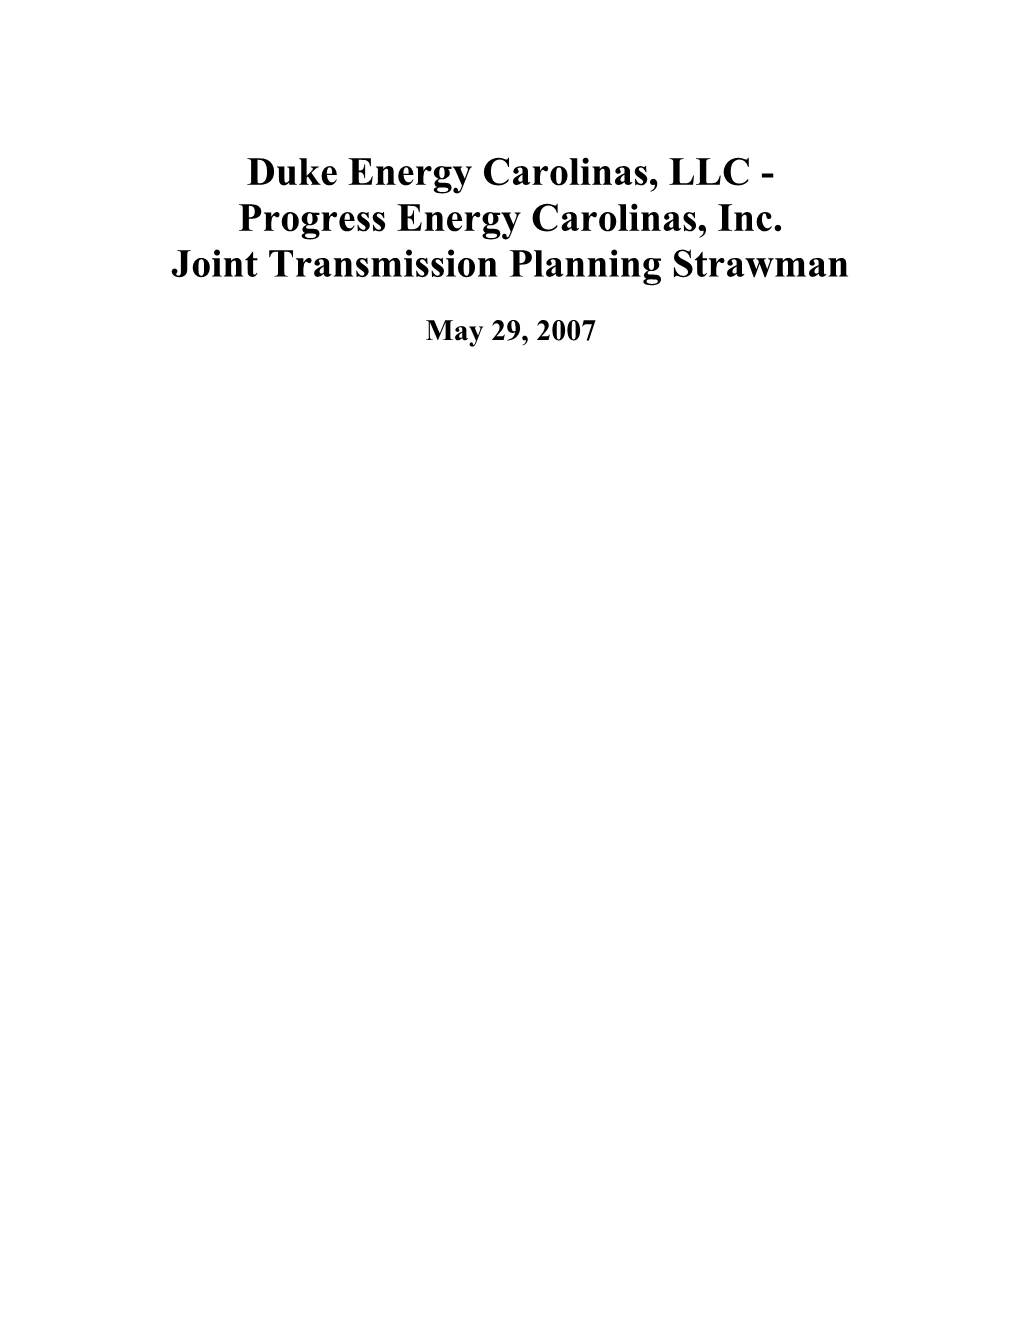 Duke Energy Carolinas (Duke) and Progress Energy Carolinas (Progress)